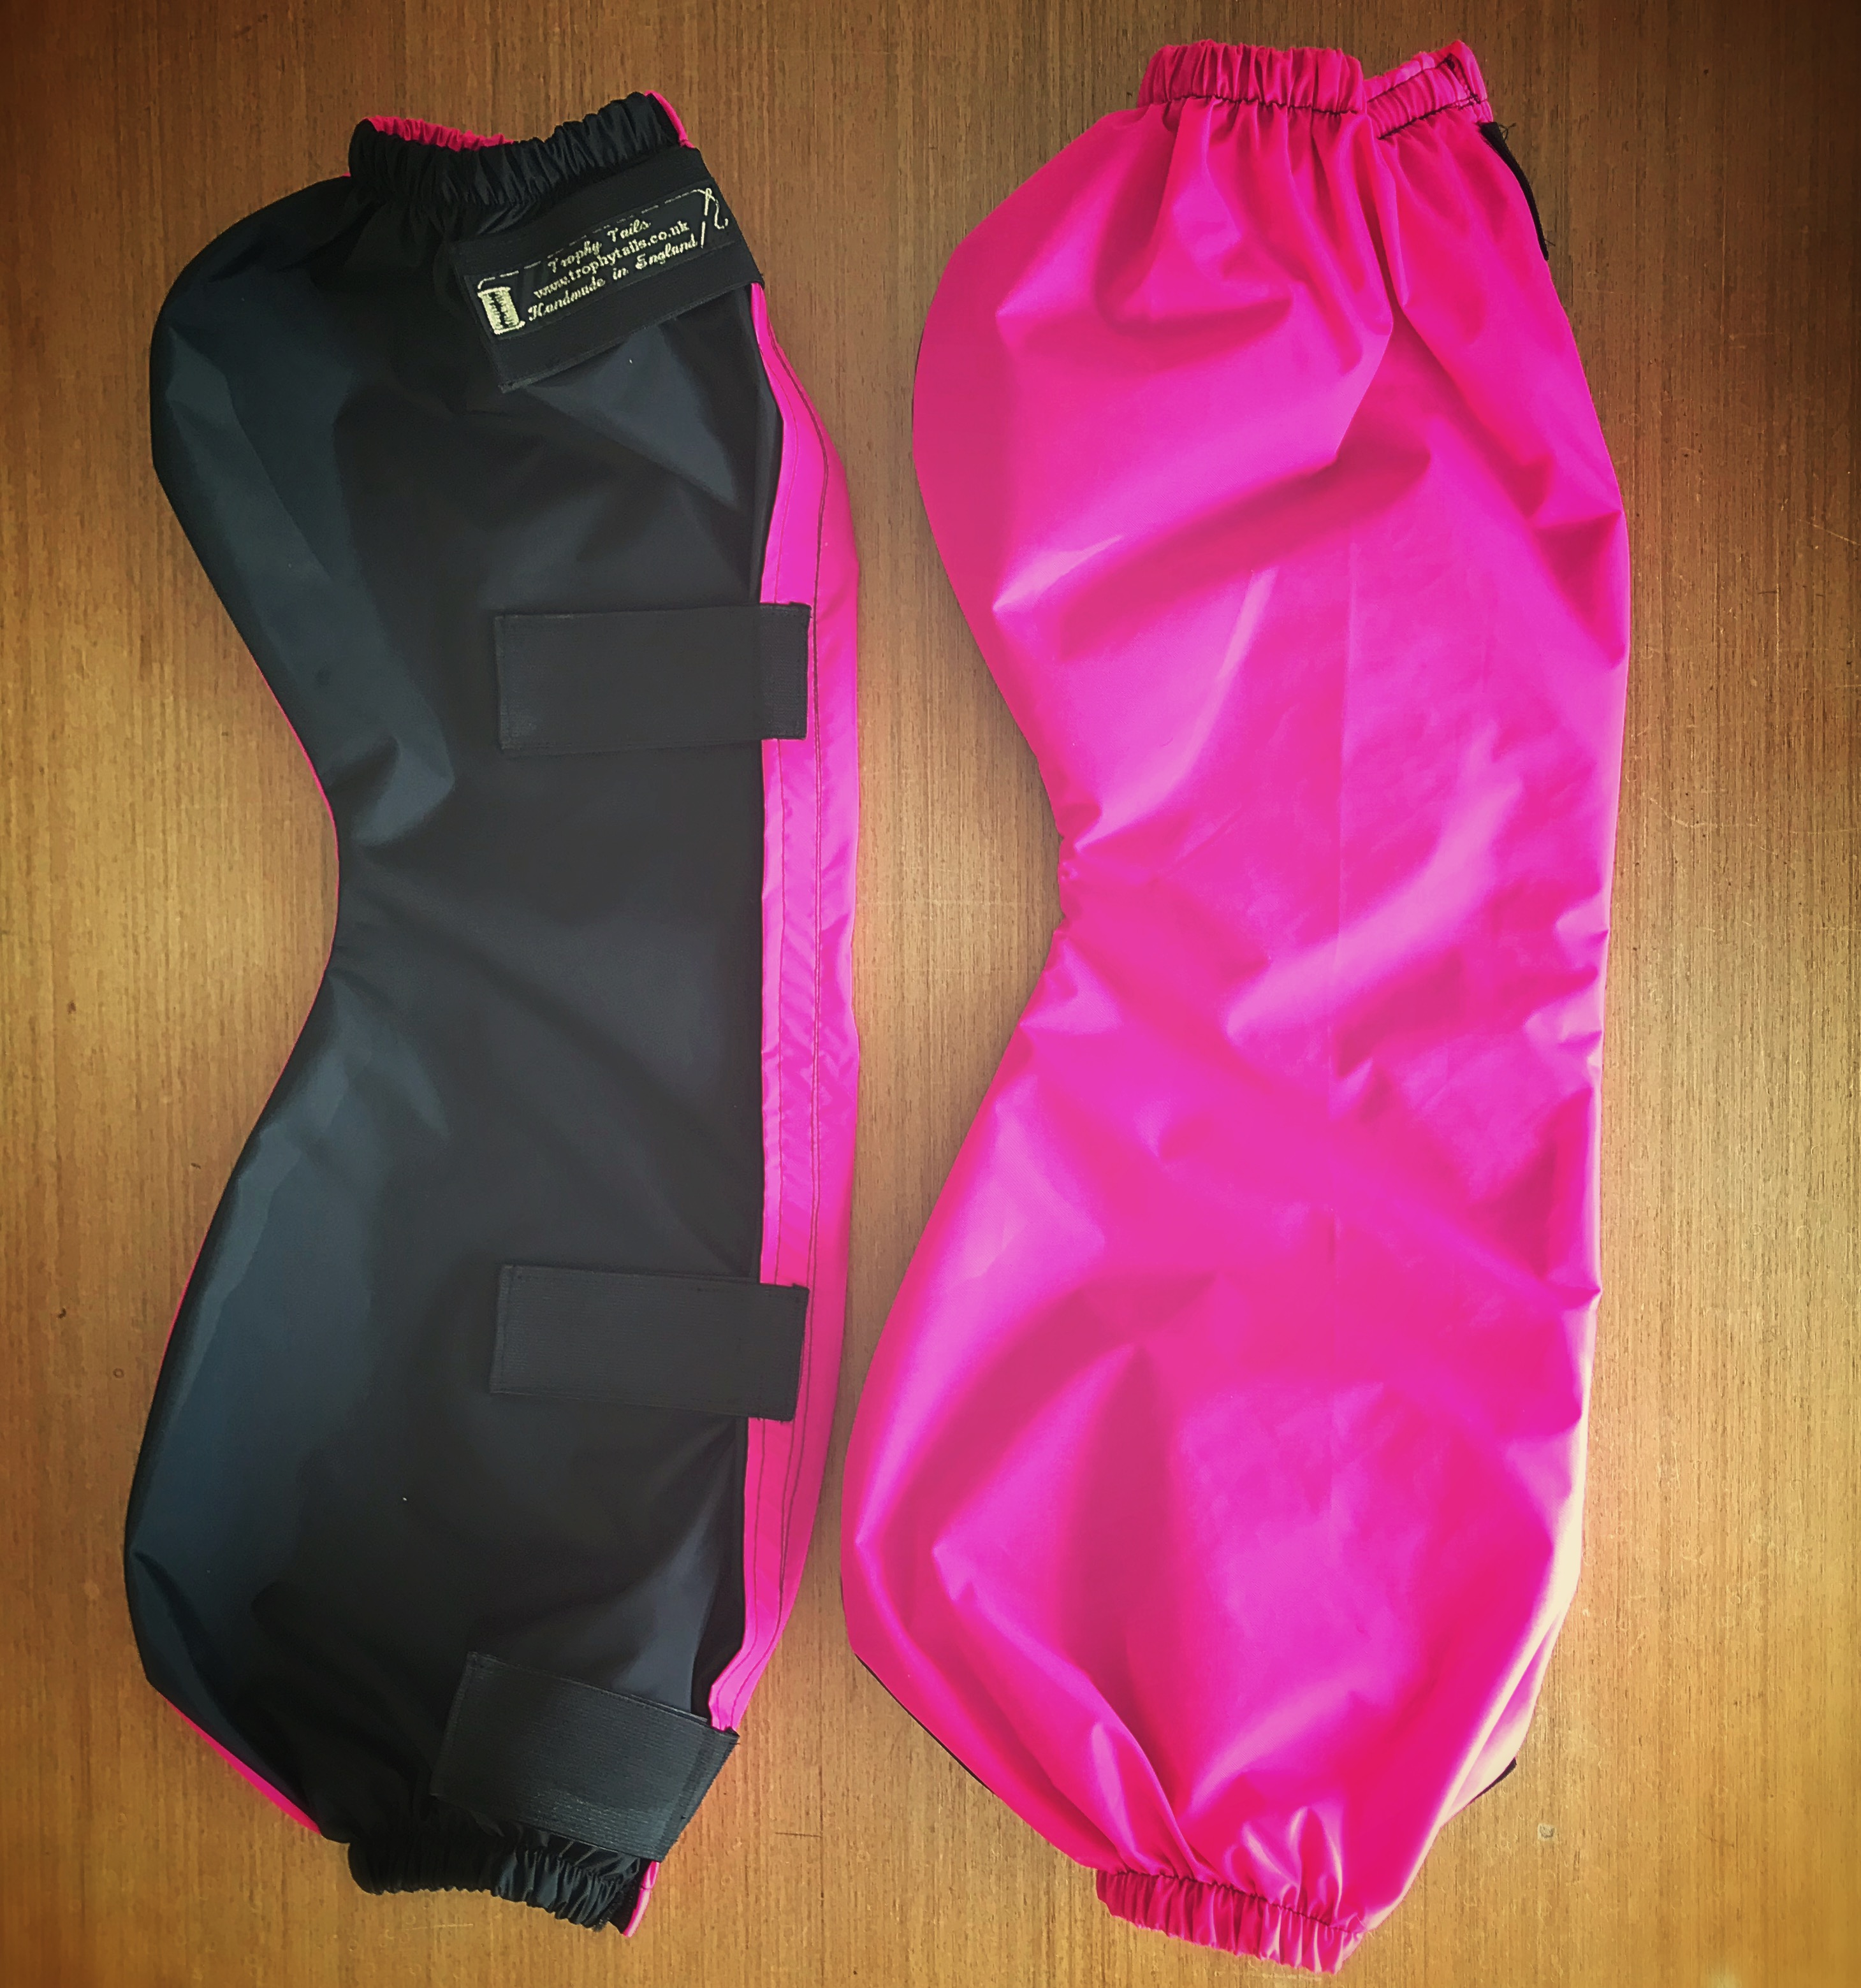 Waterproof Feather Boot set of 2 backs - Black & Pink